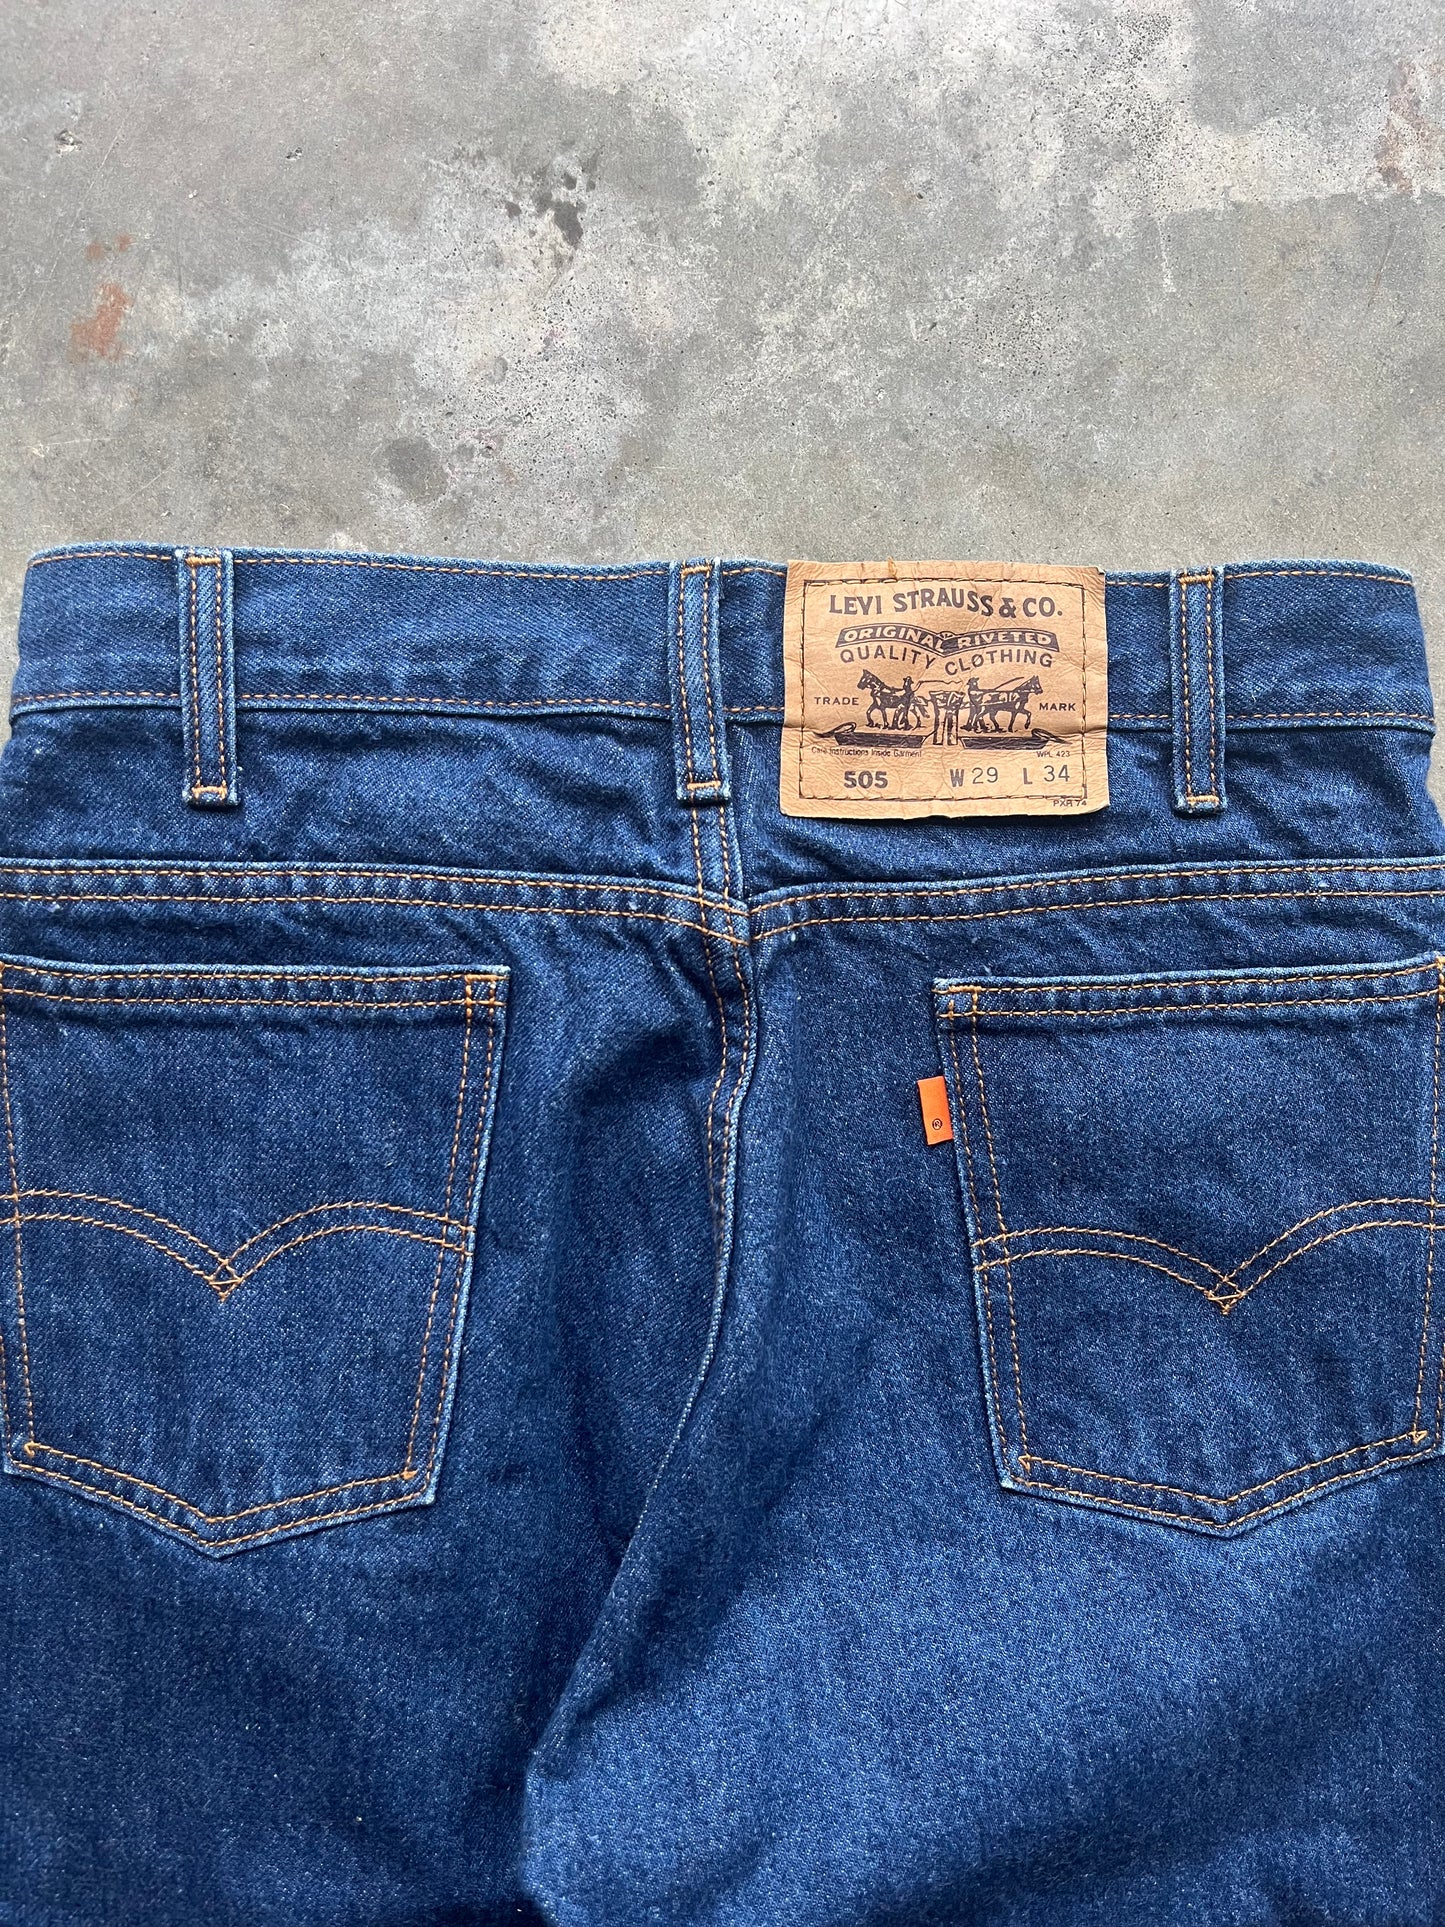 (29 x 34) Levi Denim Orange Tab Jeans